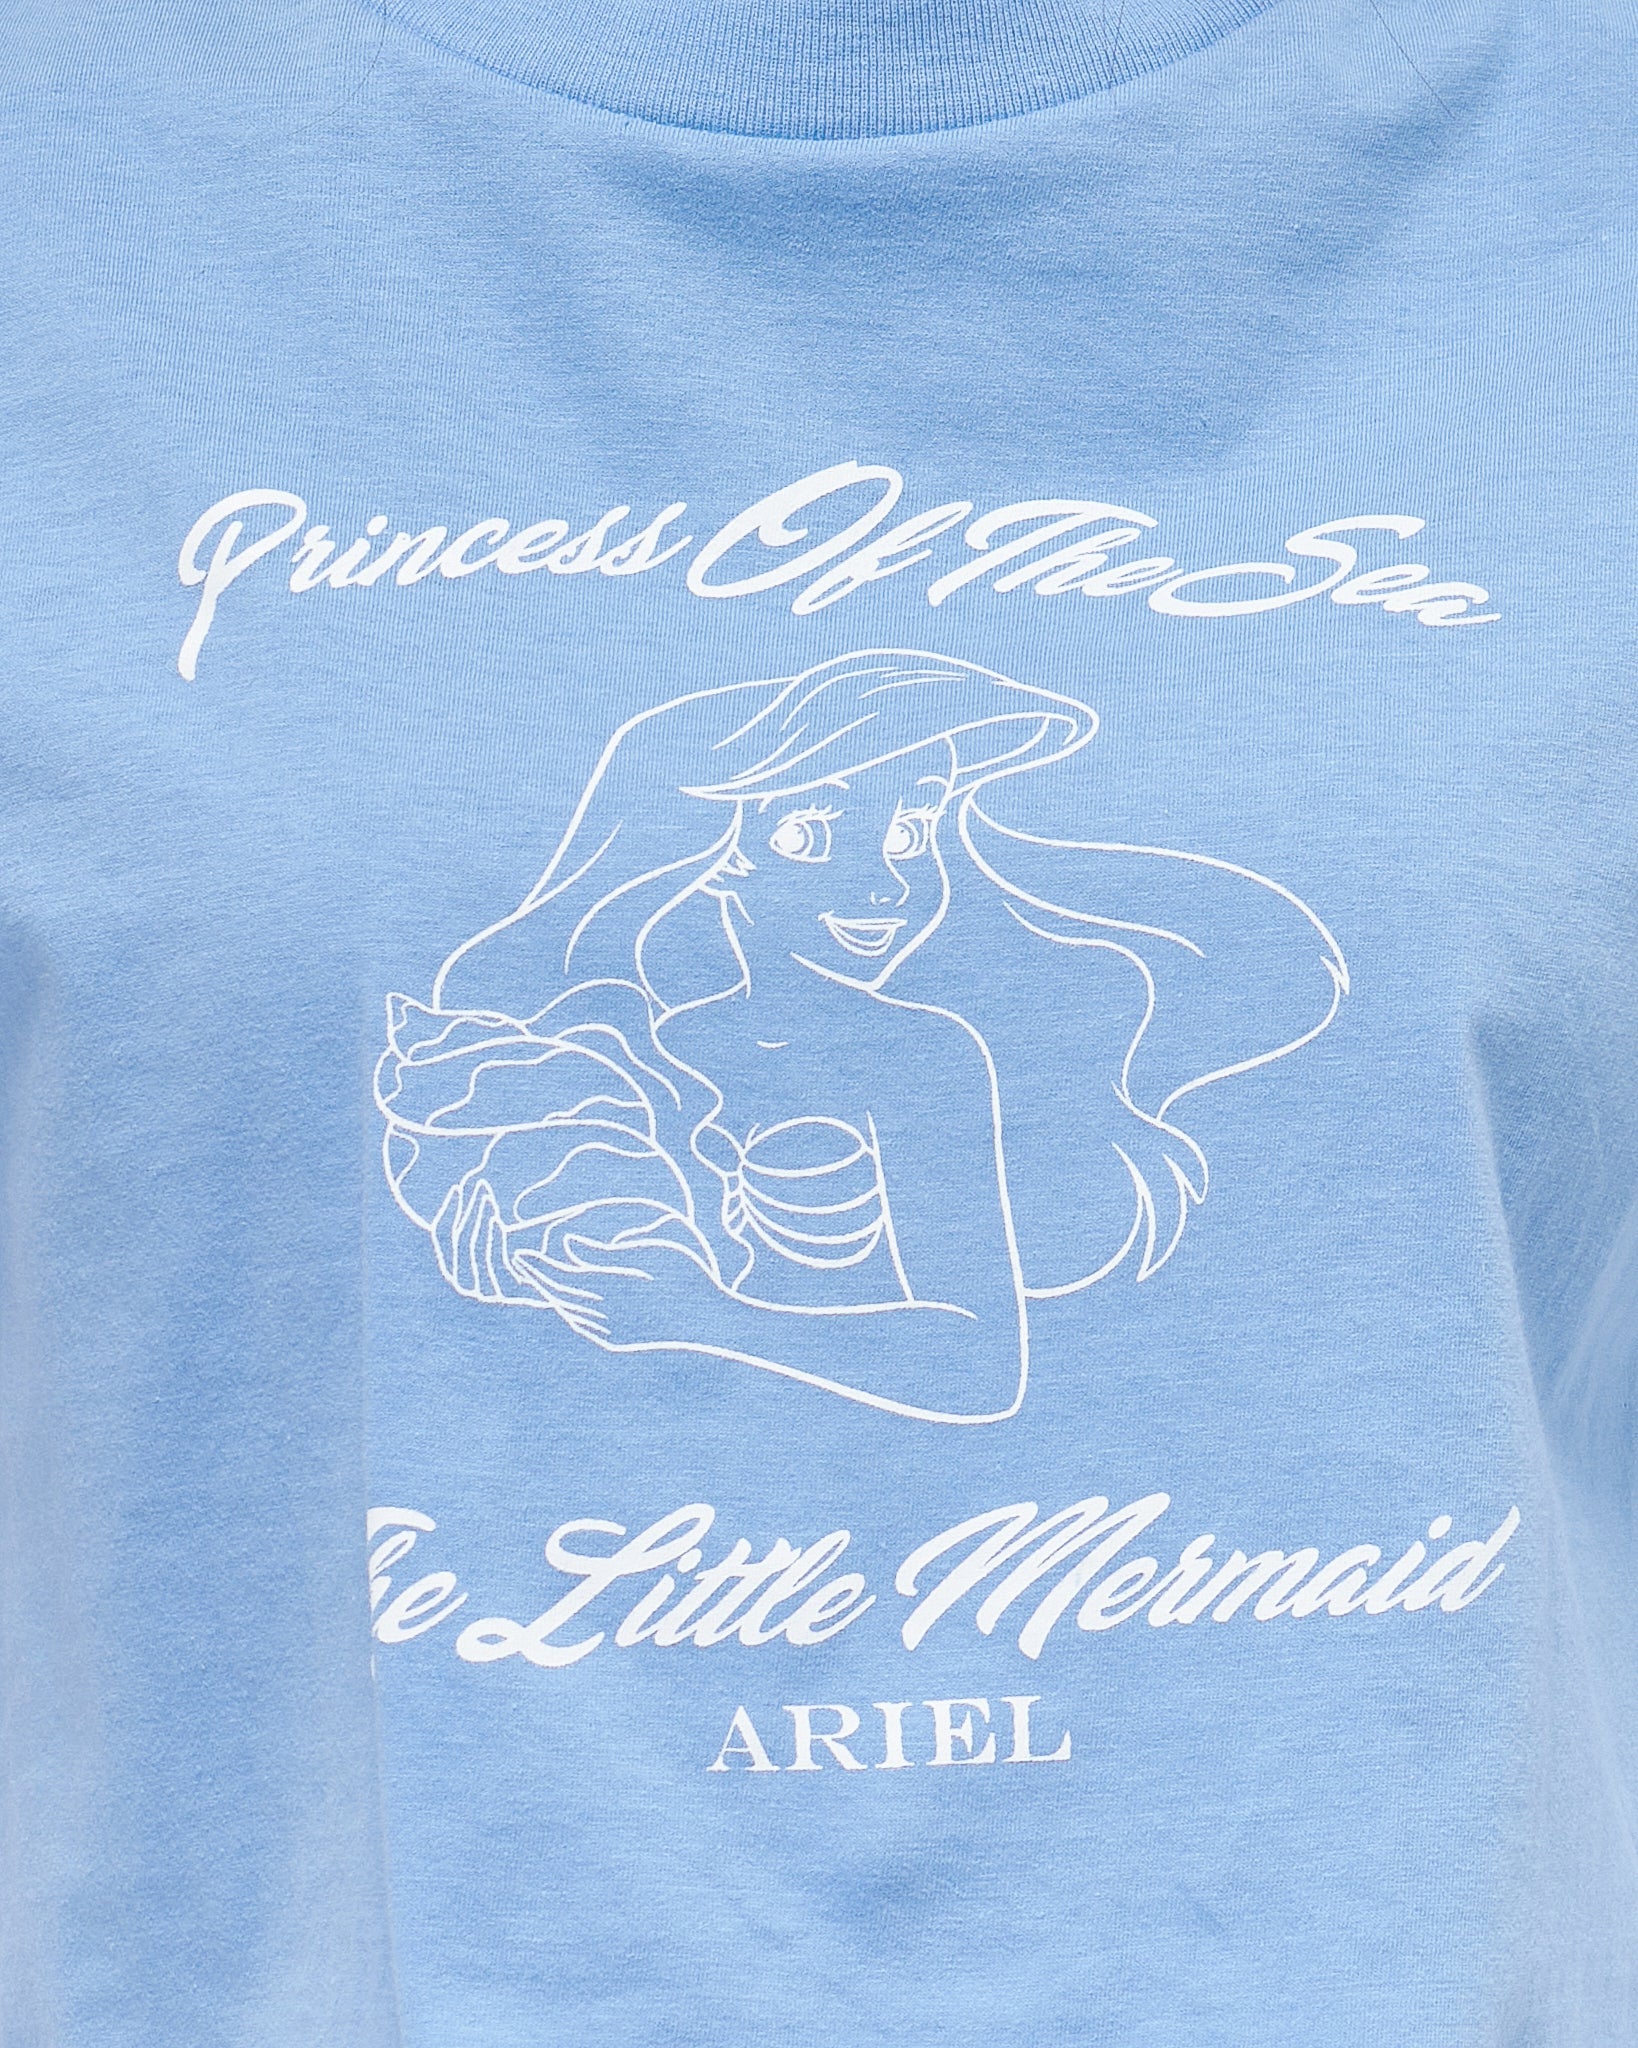 MOI OUTFIT-Ariel Lady T-Shirt Crop Top 9.90